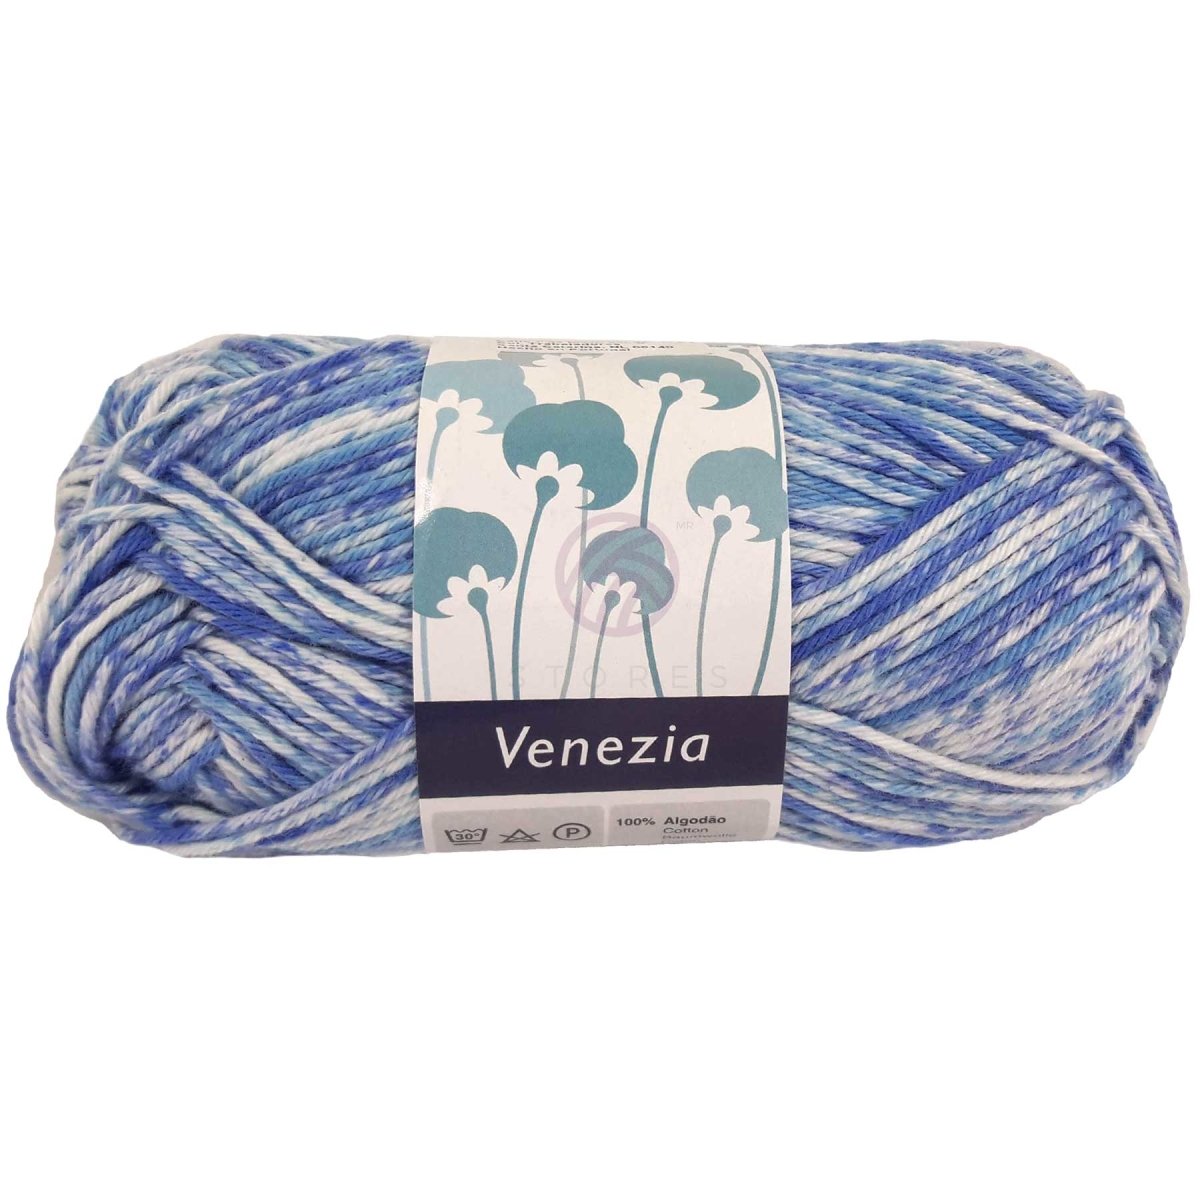 VENEZIA PRINT - Crochetstores195-825606850195825